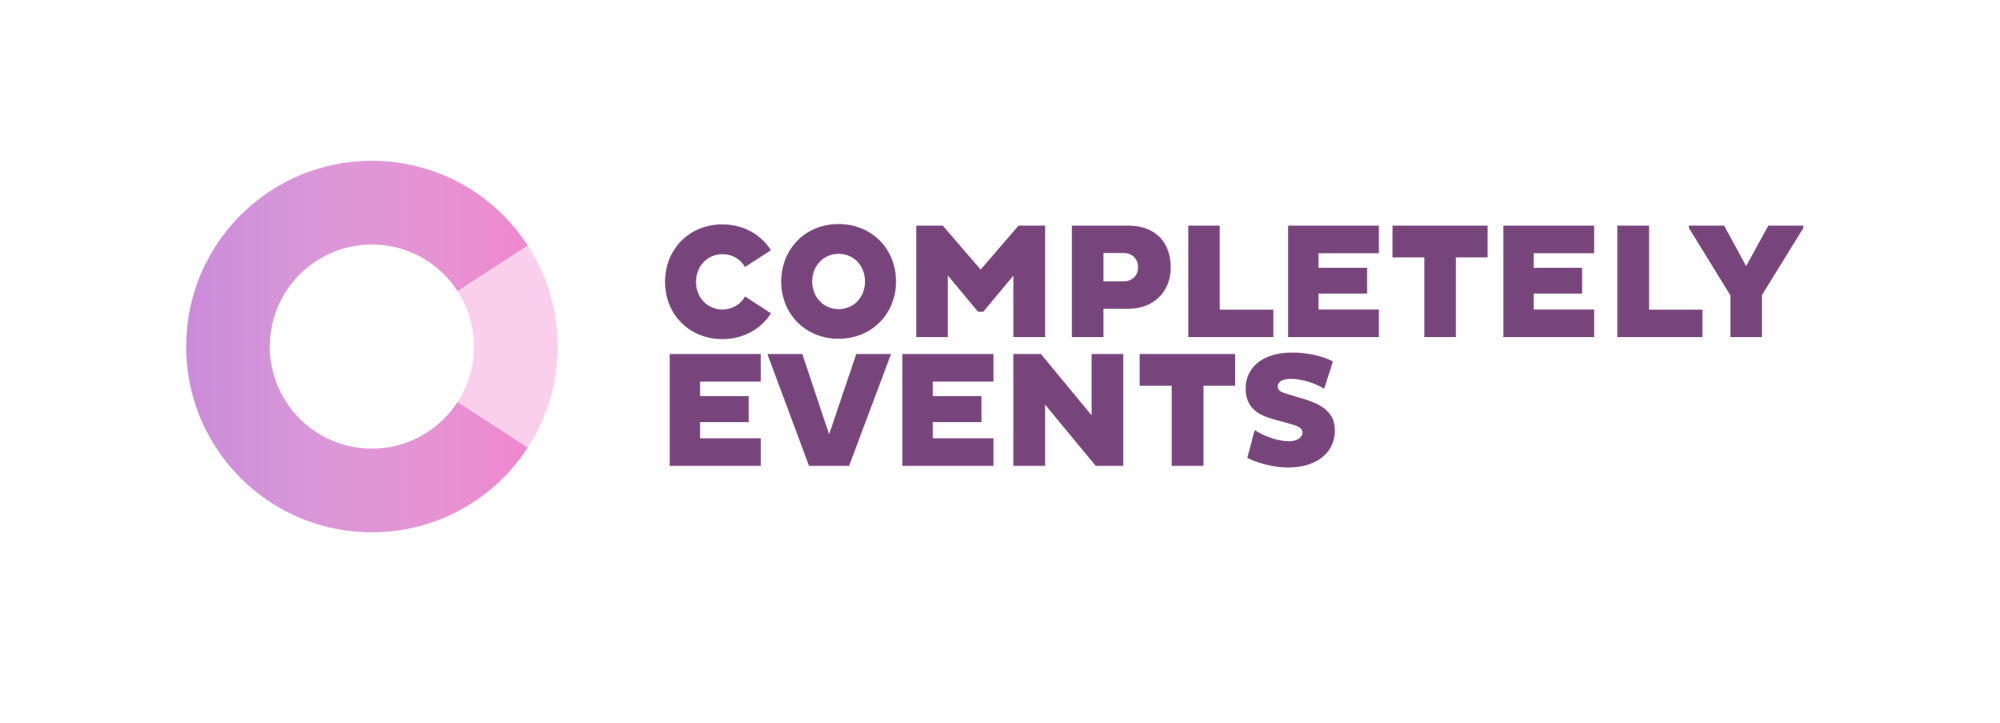 Completely-Events_Horizontal_GradColour_2018_V2-01